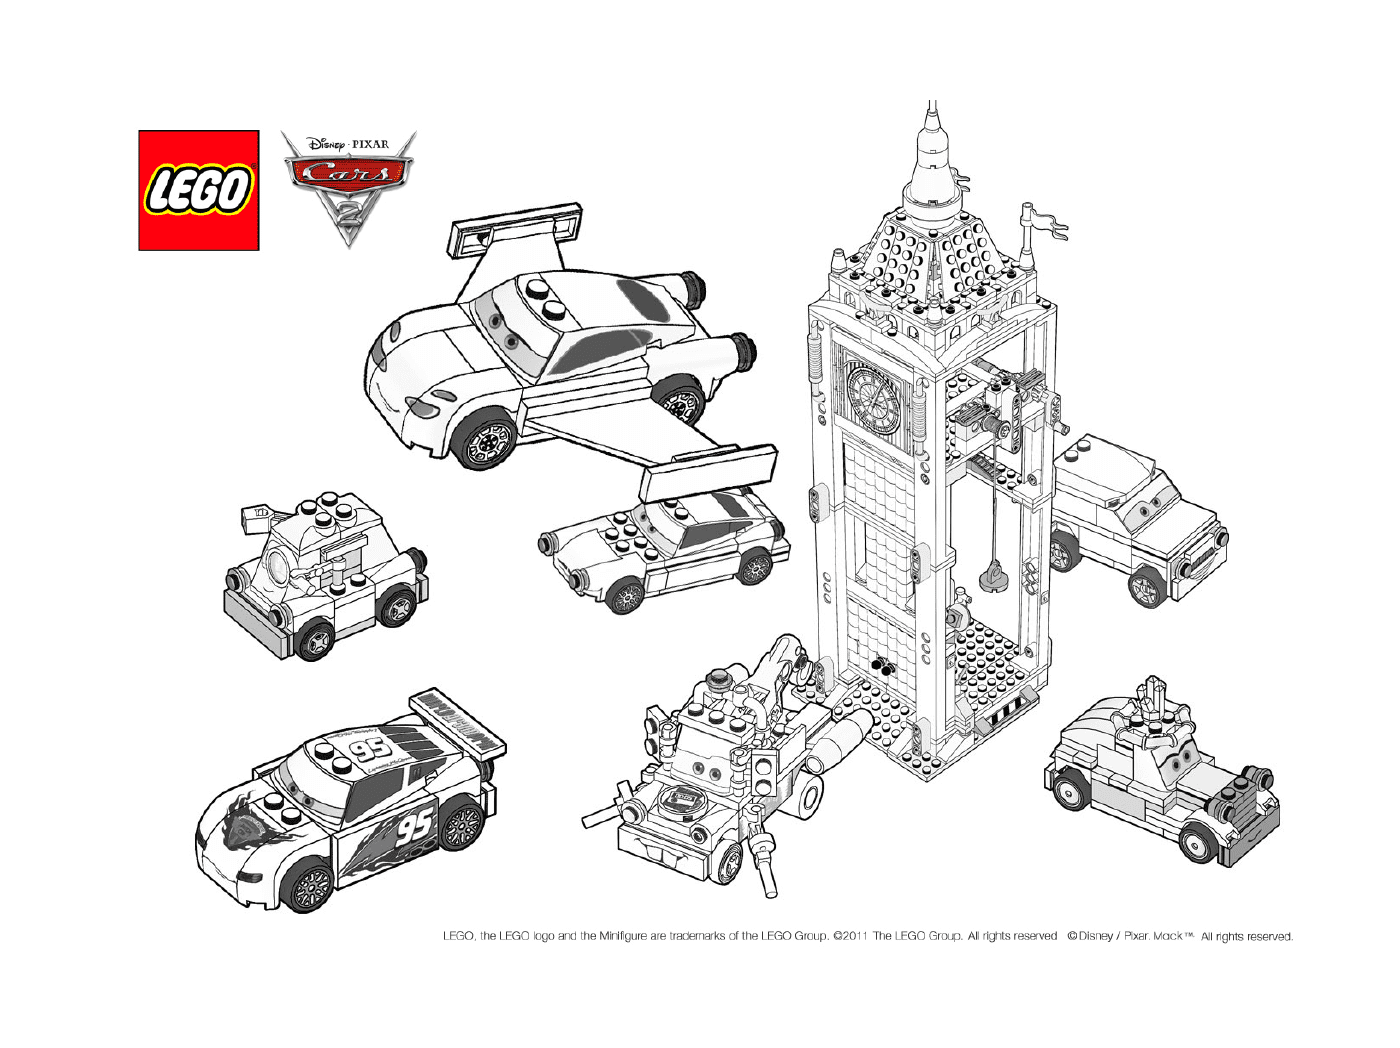  Lego Cars 3, the film 